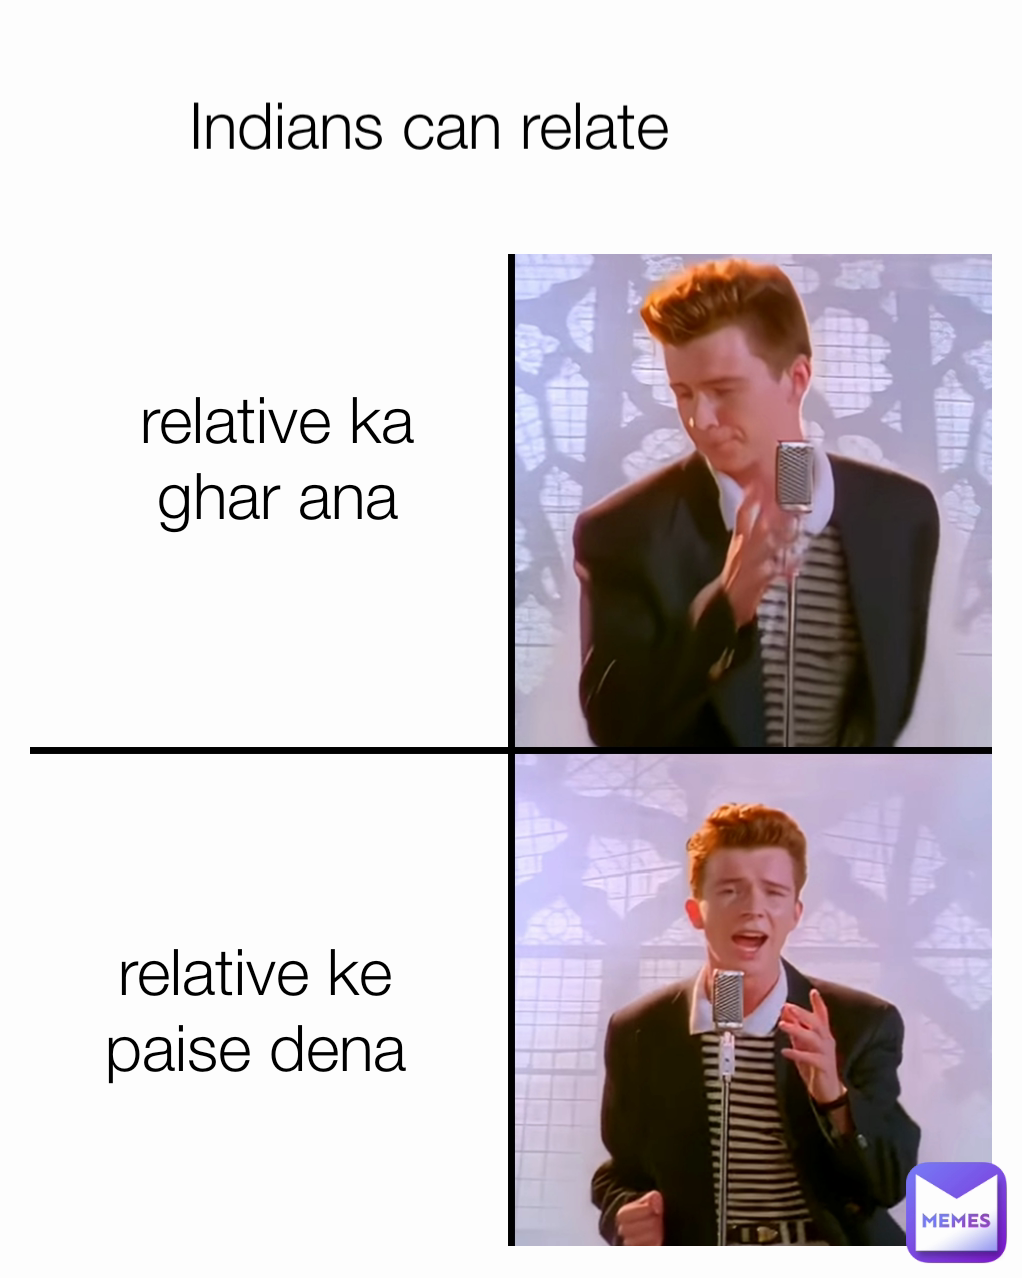 
Indians can relate relative ka ghar ana relative ke paise dena